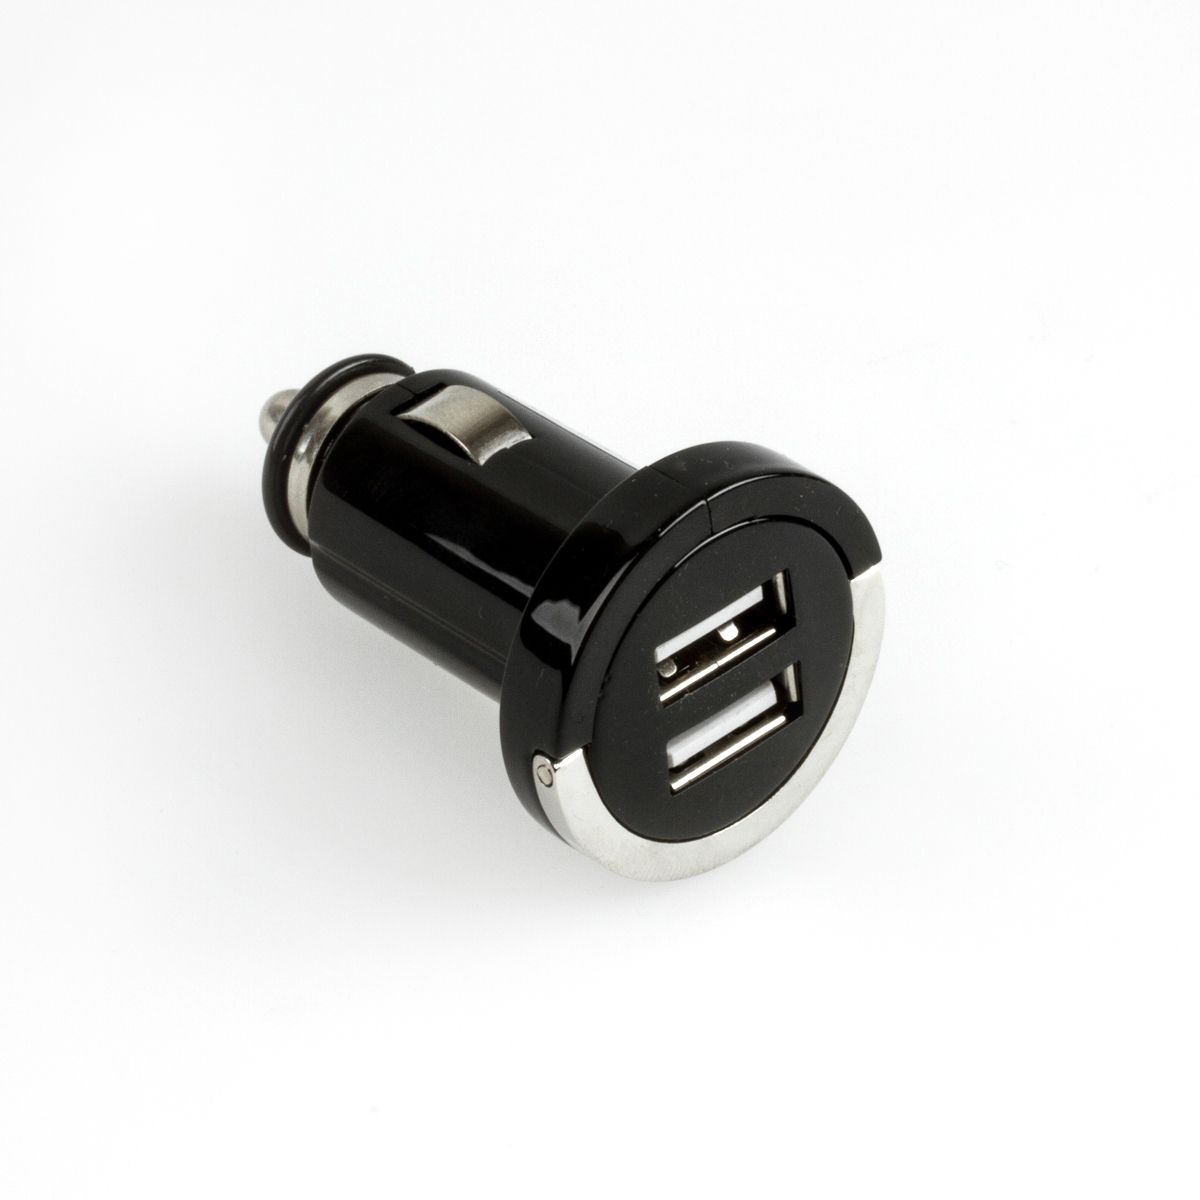 Mini chargeur de voiture 12-24V vers 2x USB 5V max. 2100mA